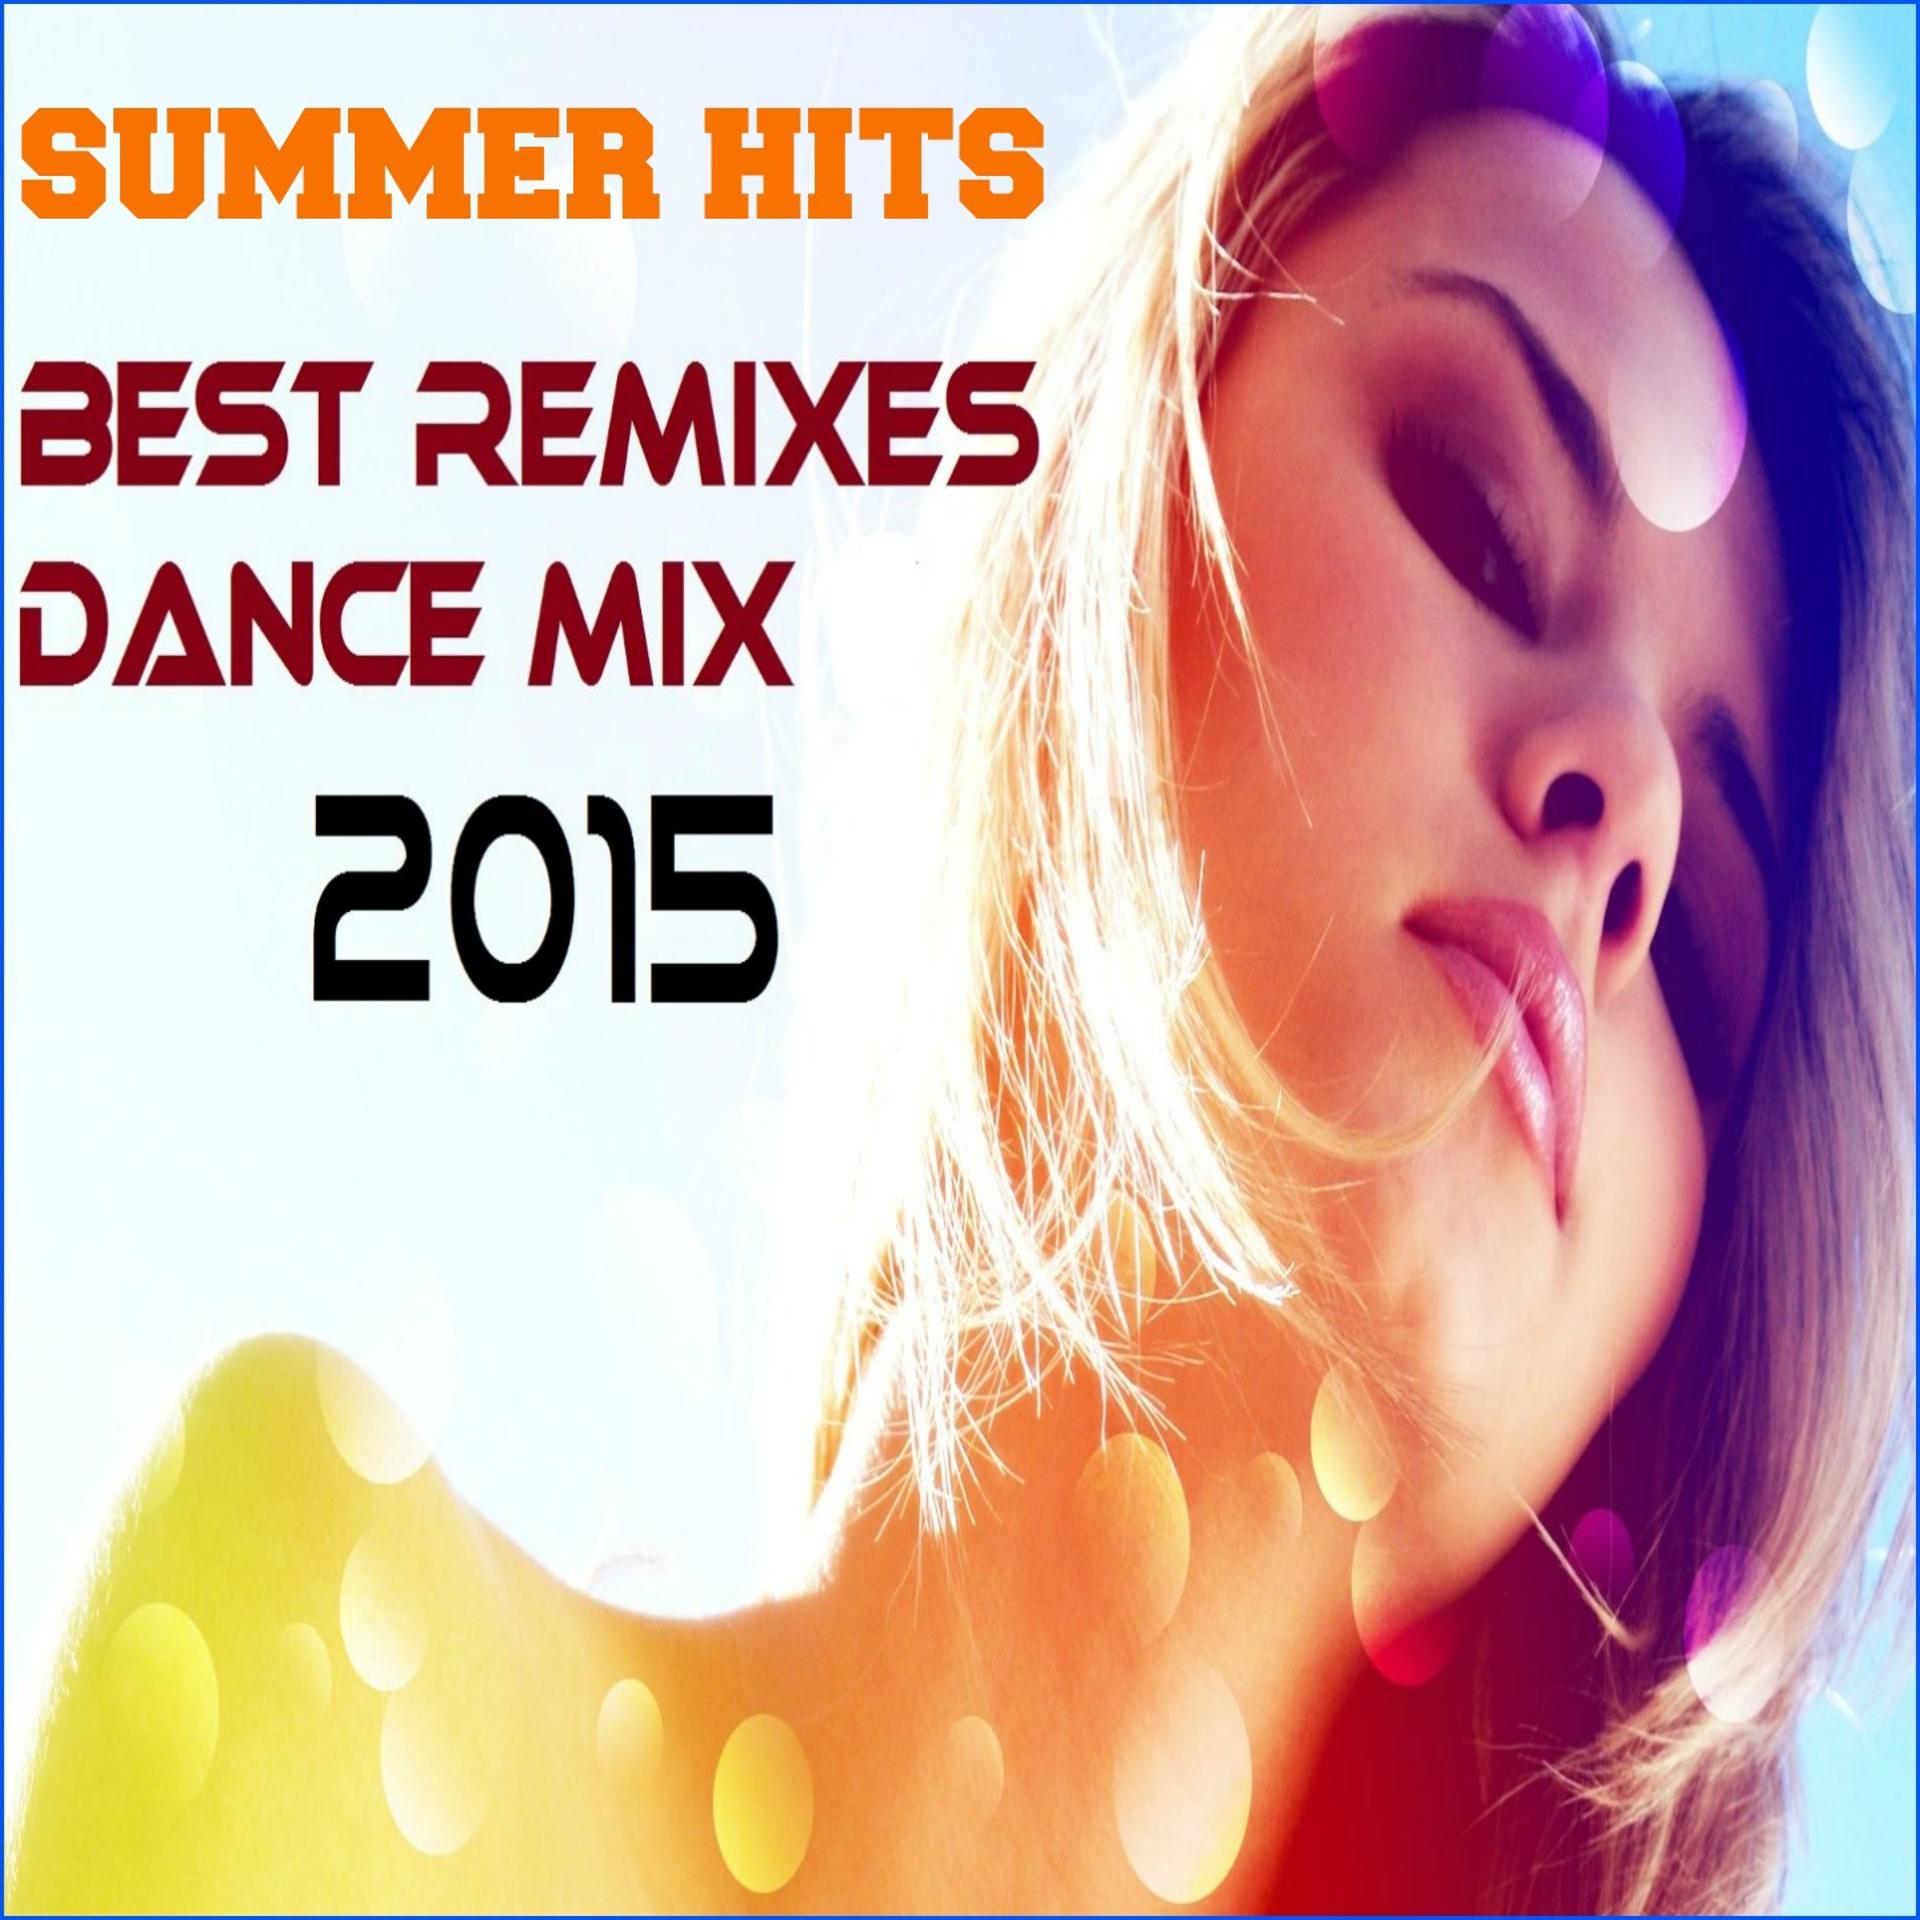 Summer Hits. Слушать песню Dance Mix. Танцевали Remix. Best of Remix. Best remixes dance